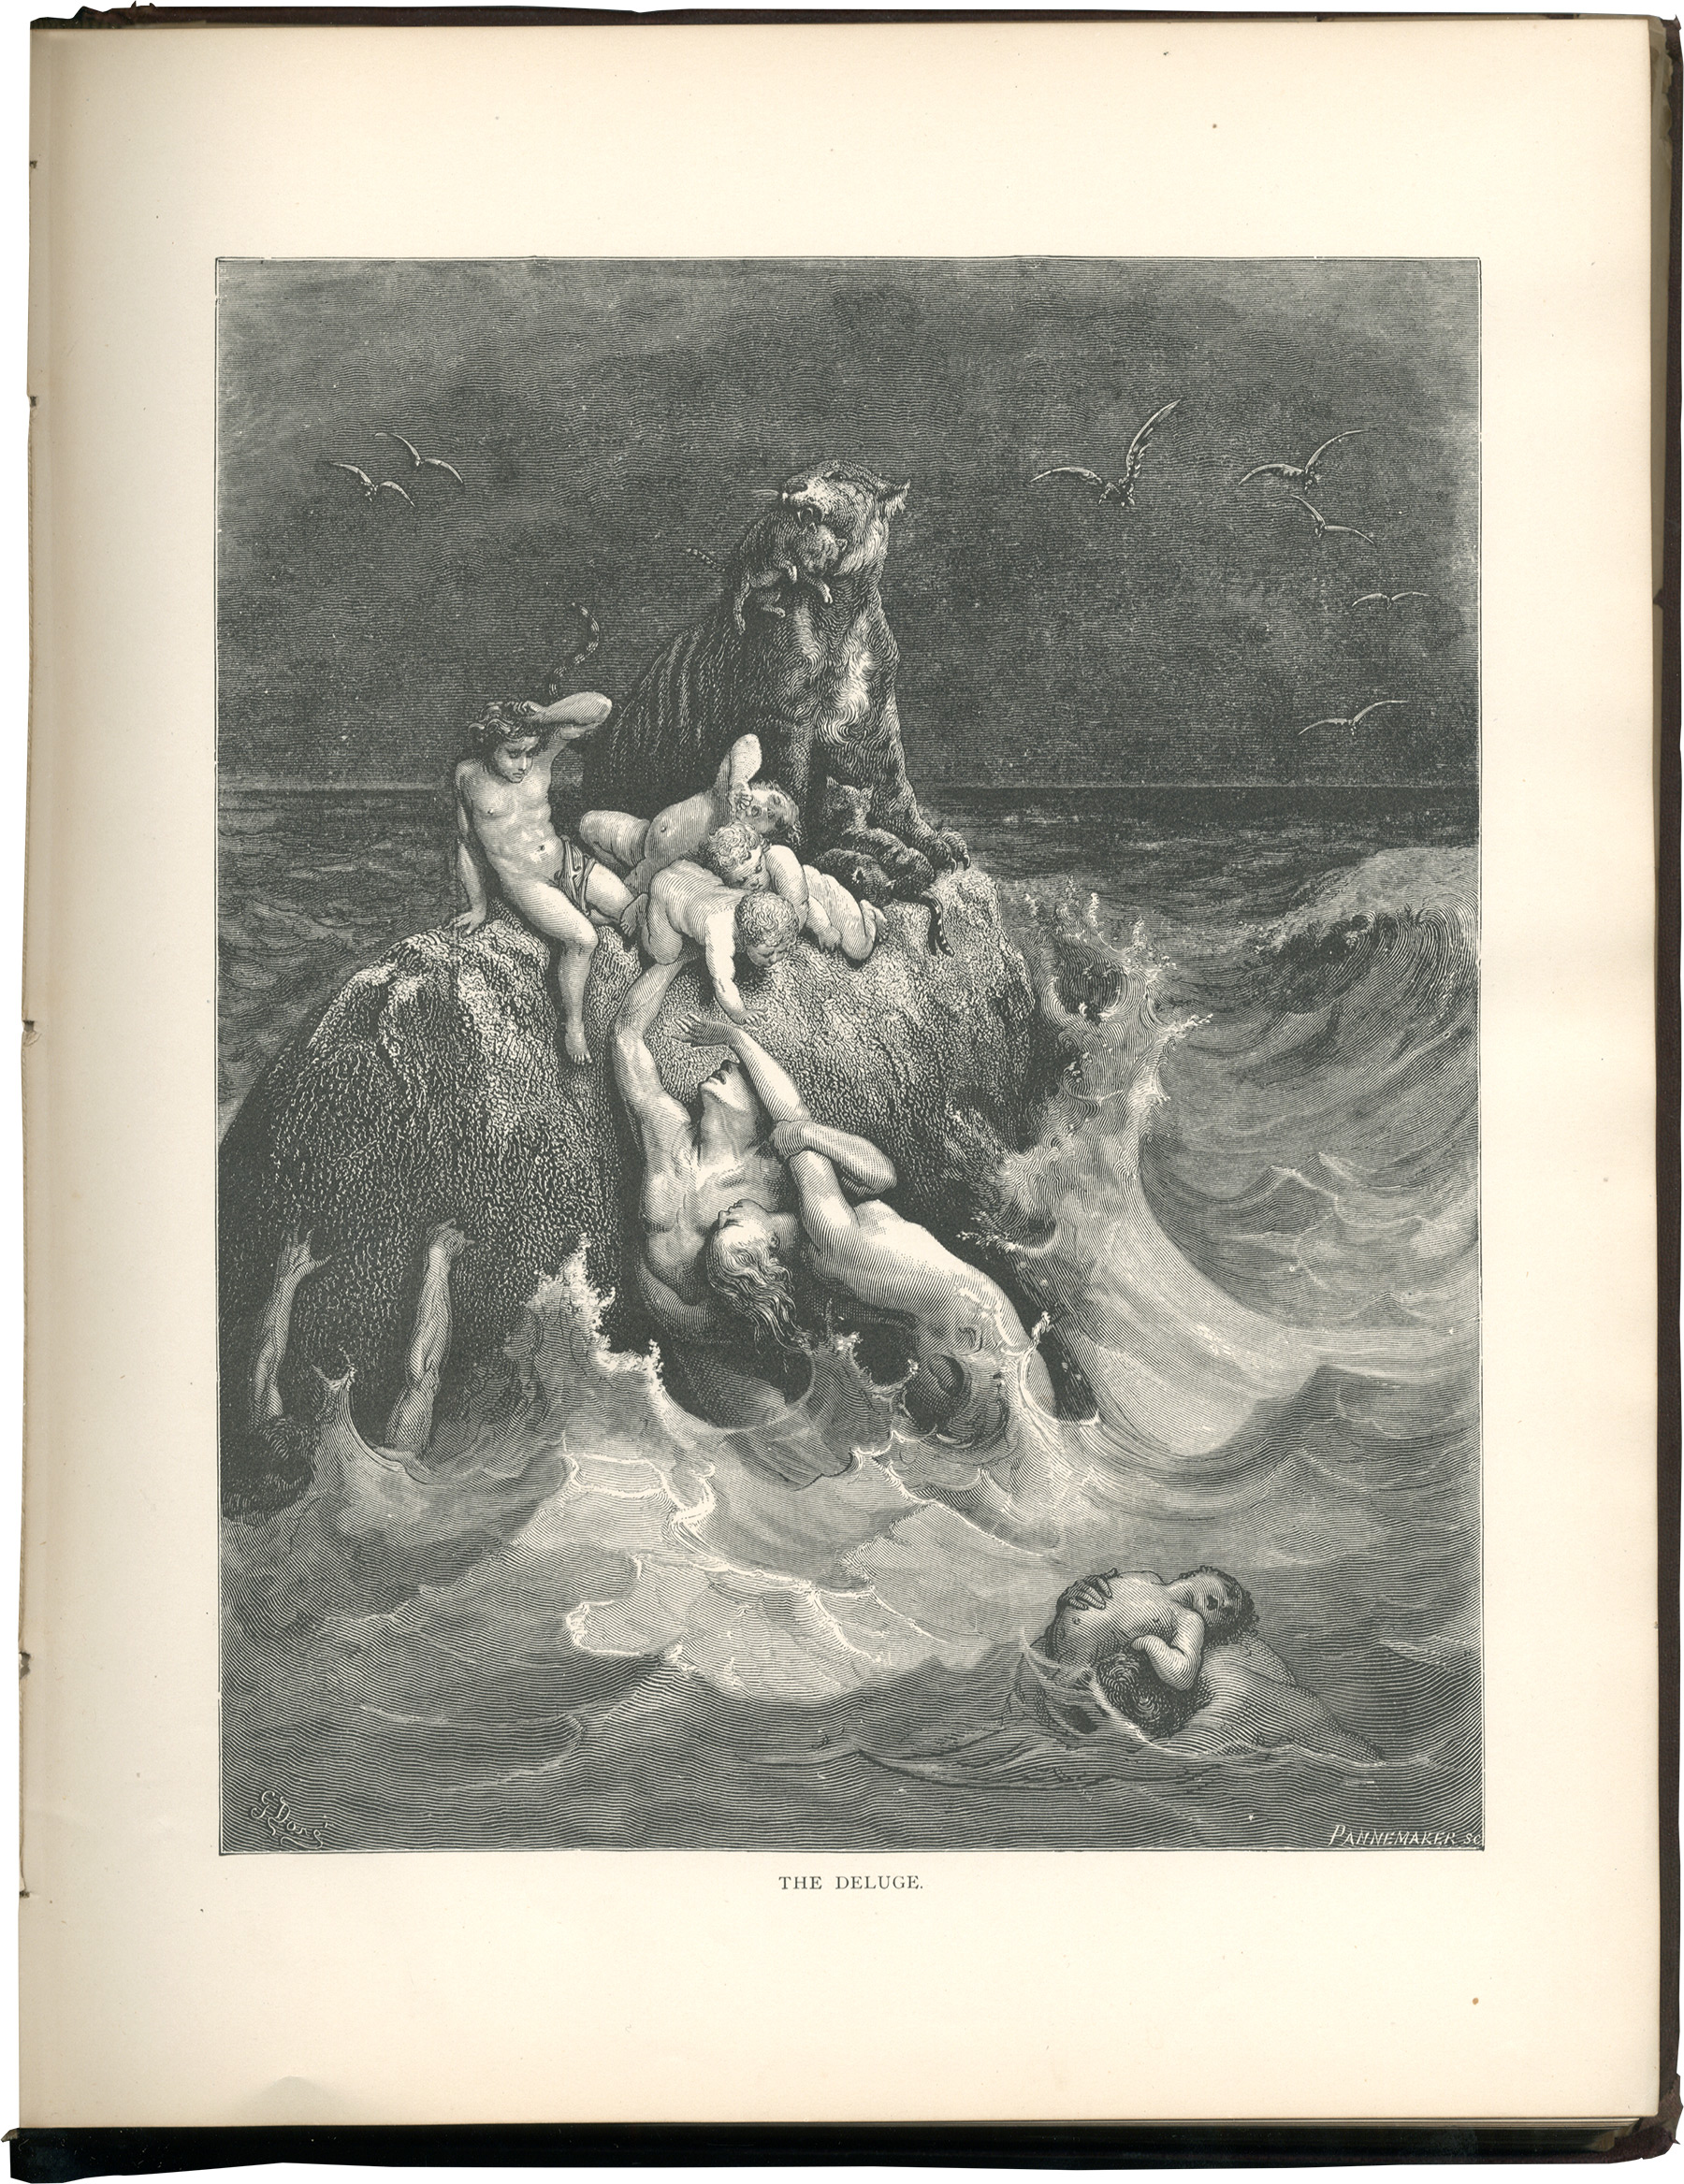 Gustave Doré, The Deluge